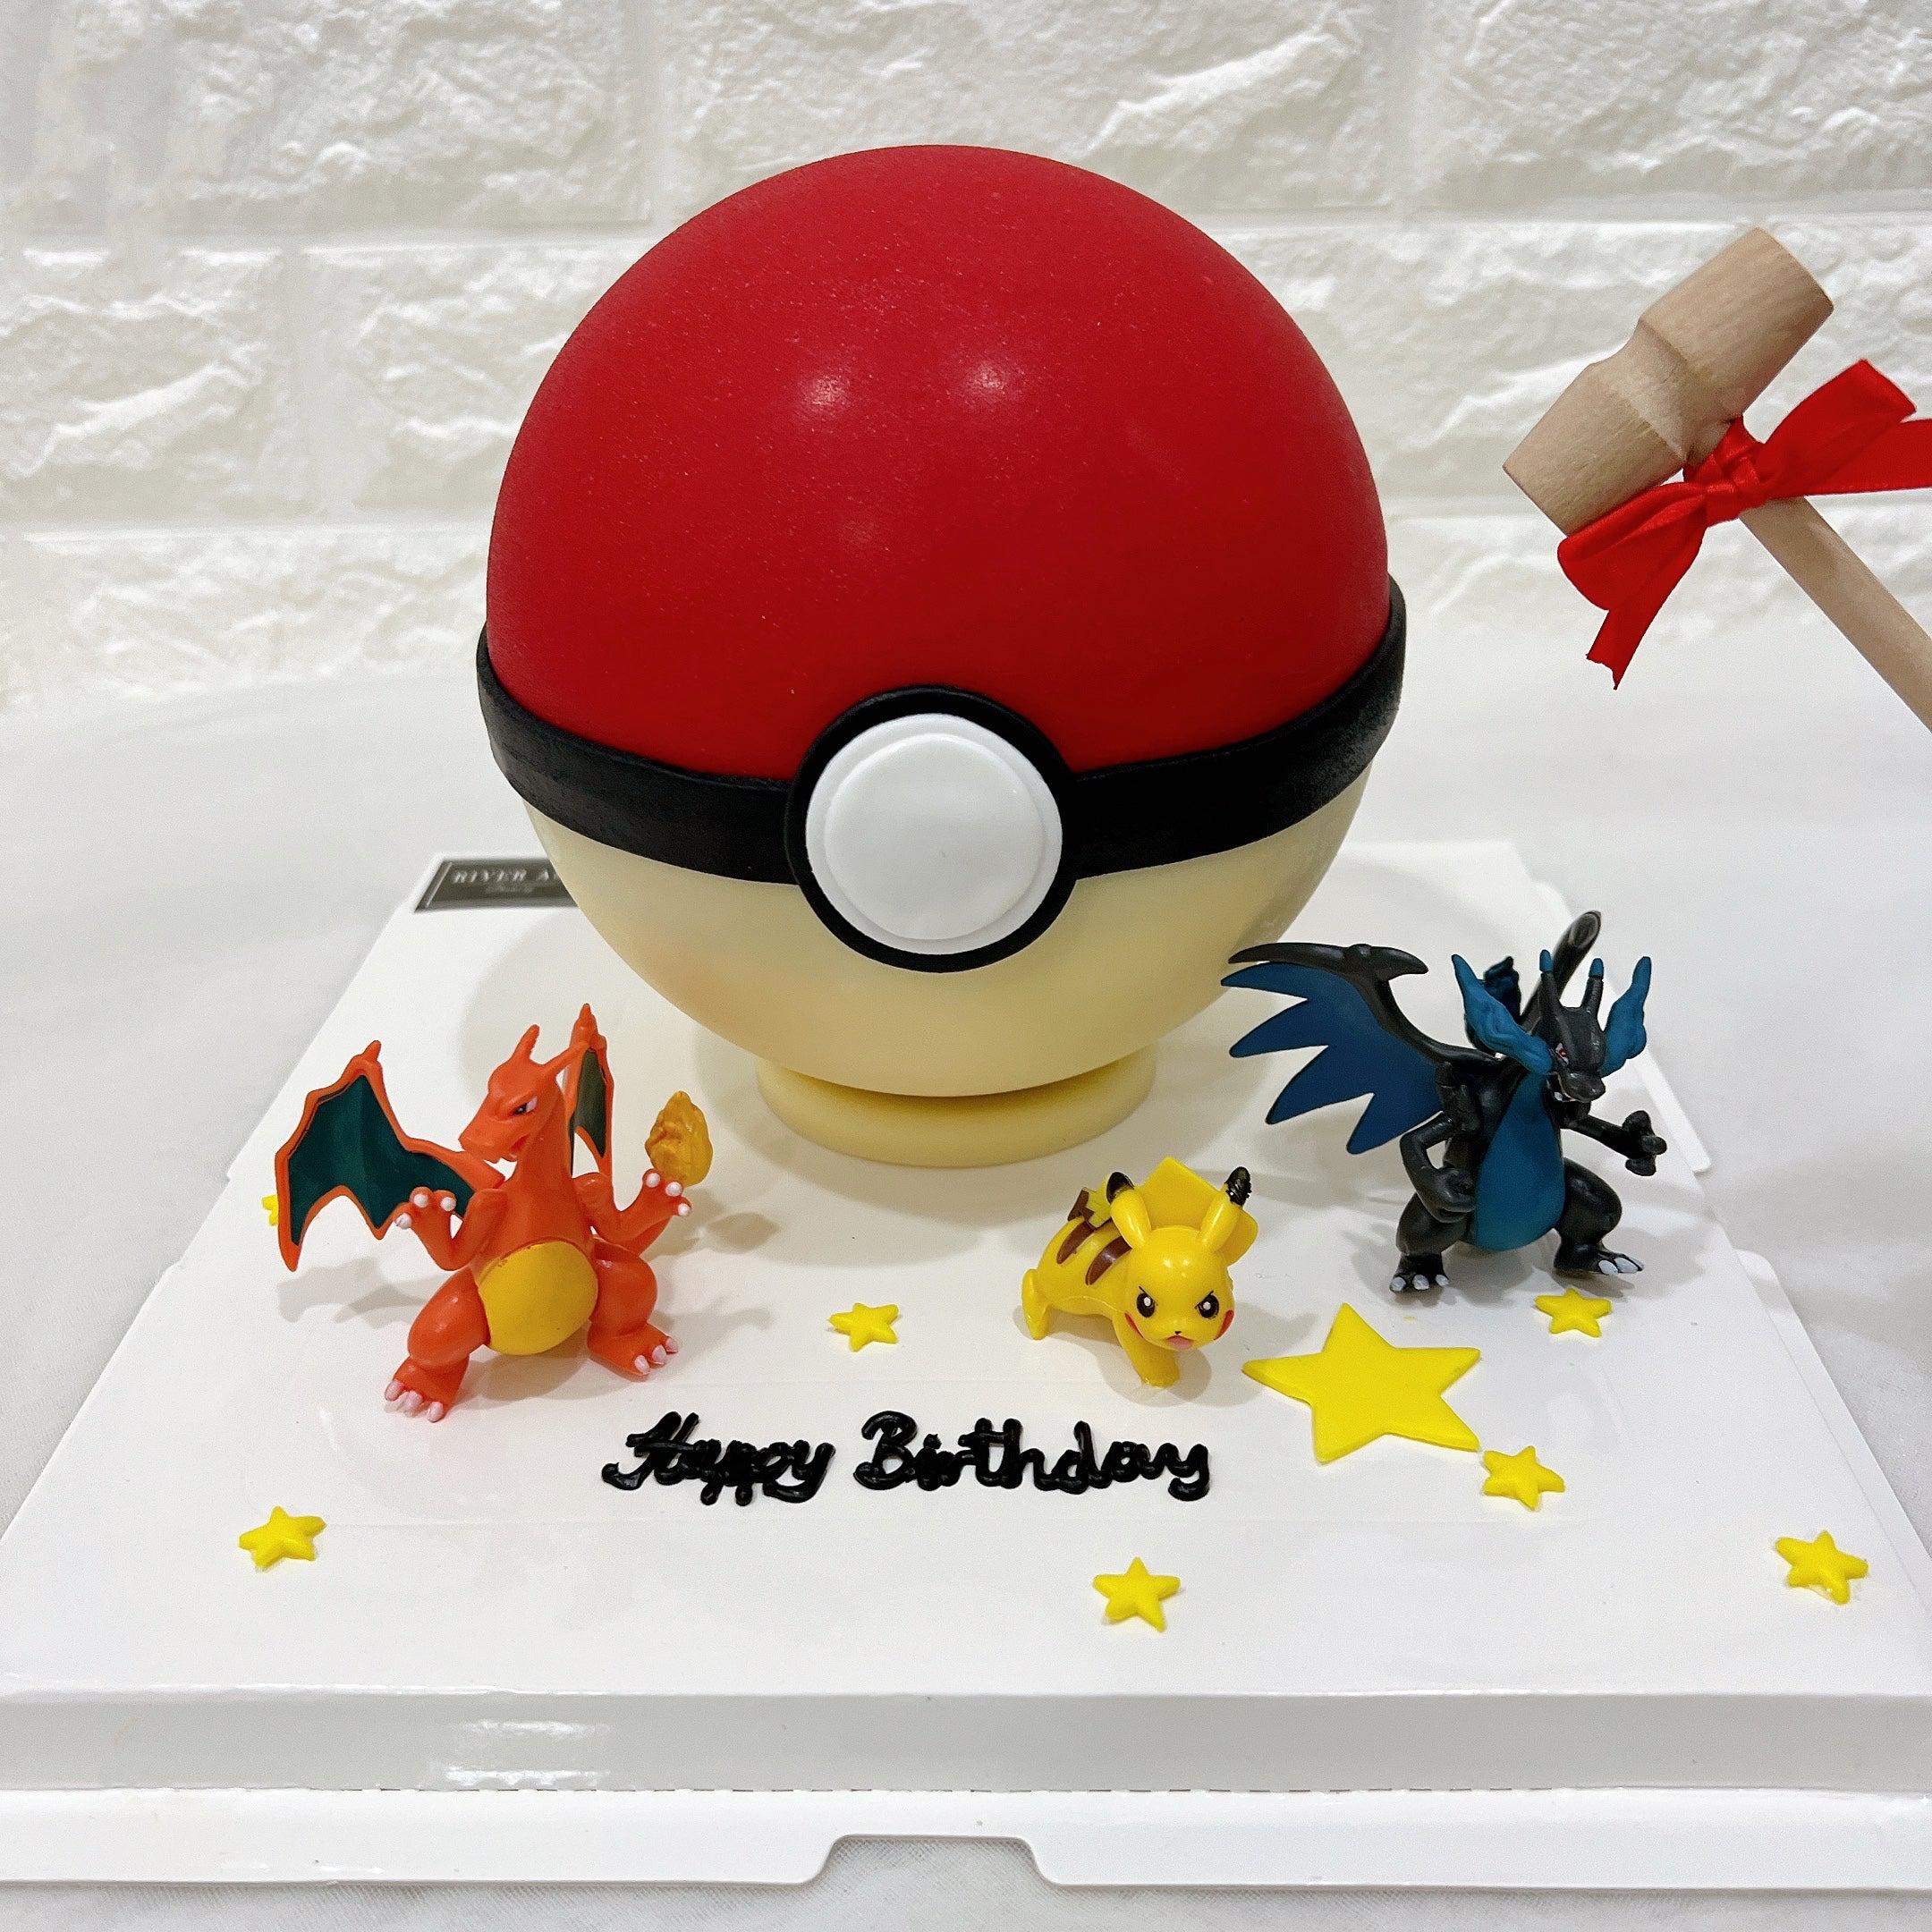 Pinata cake Singapore/ Pokemon pikachu pinata cake SG - River Ash